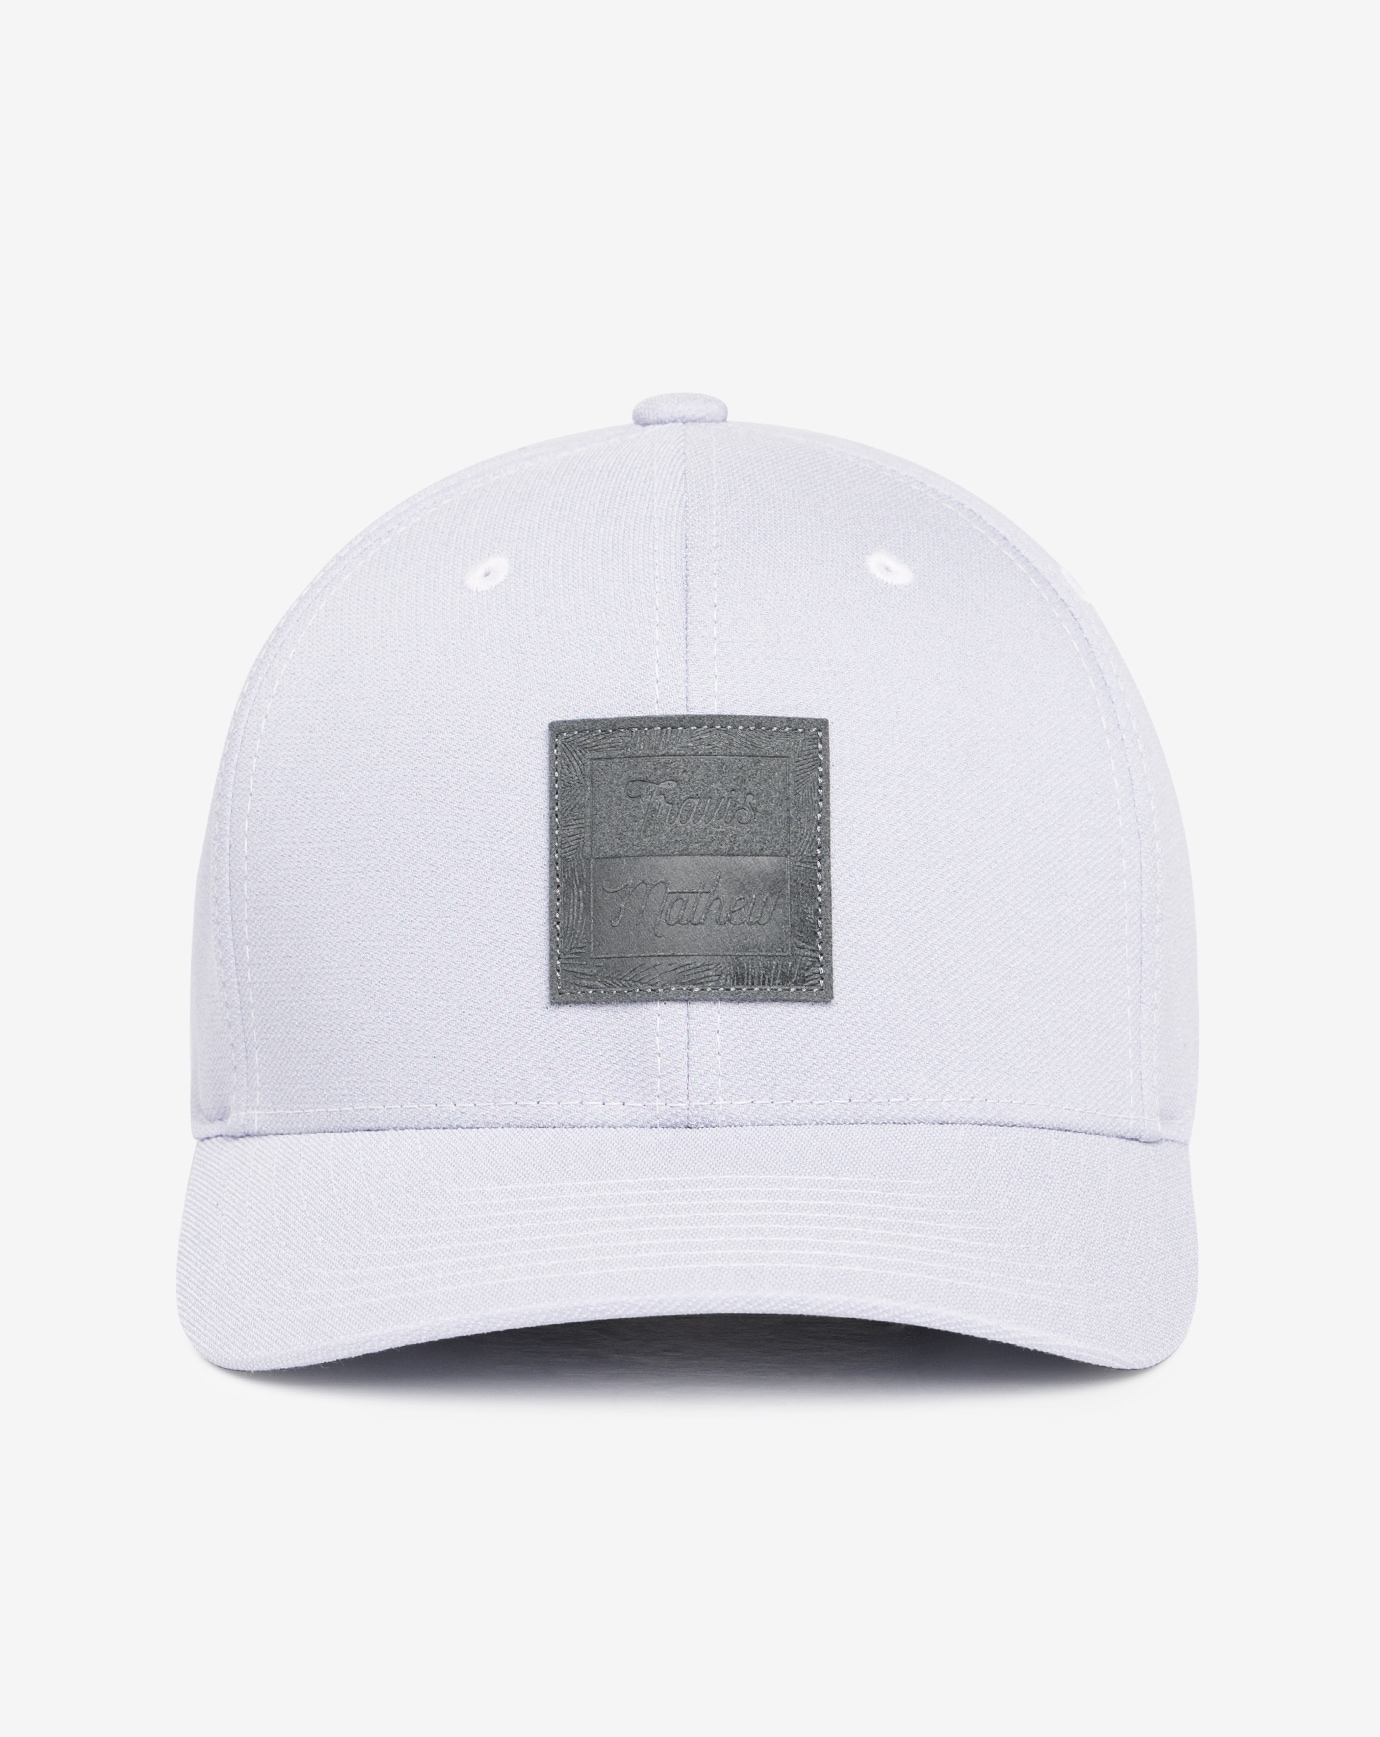 Snapback Hats, Caps & Performance Headwear | TravisMathew